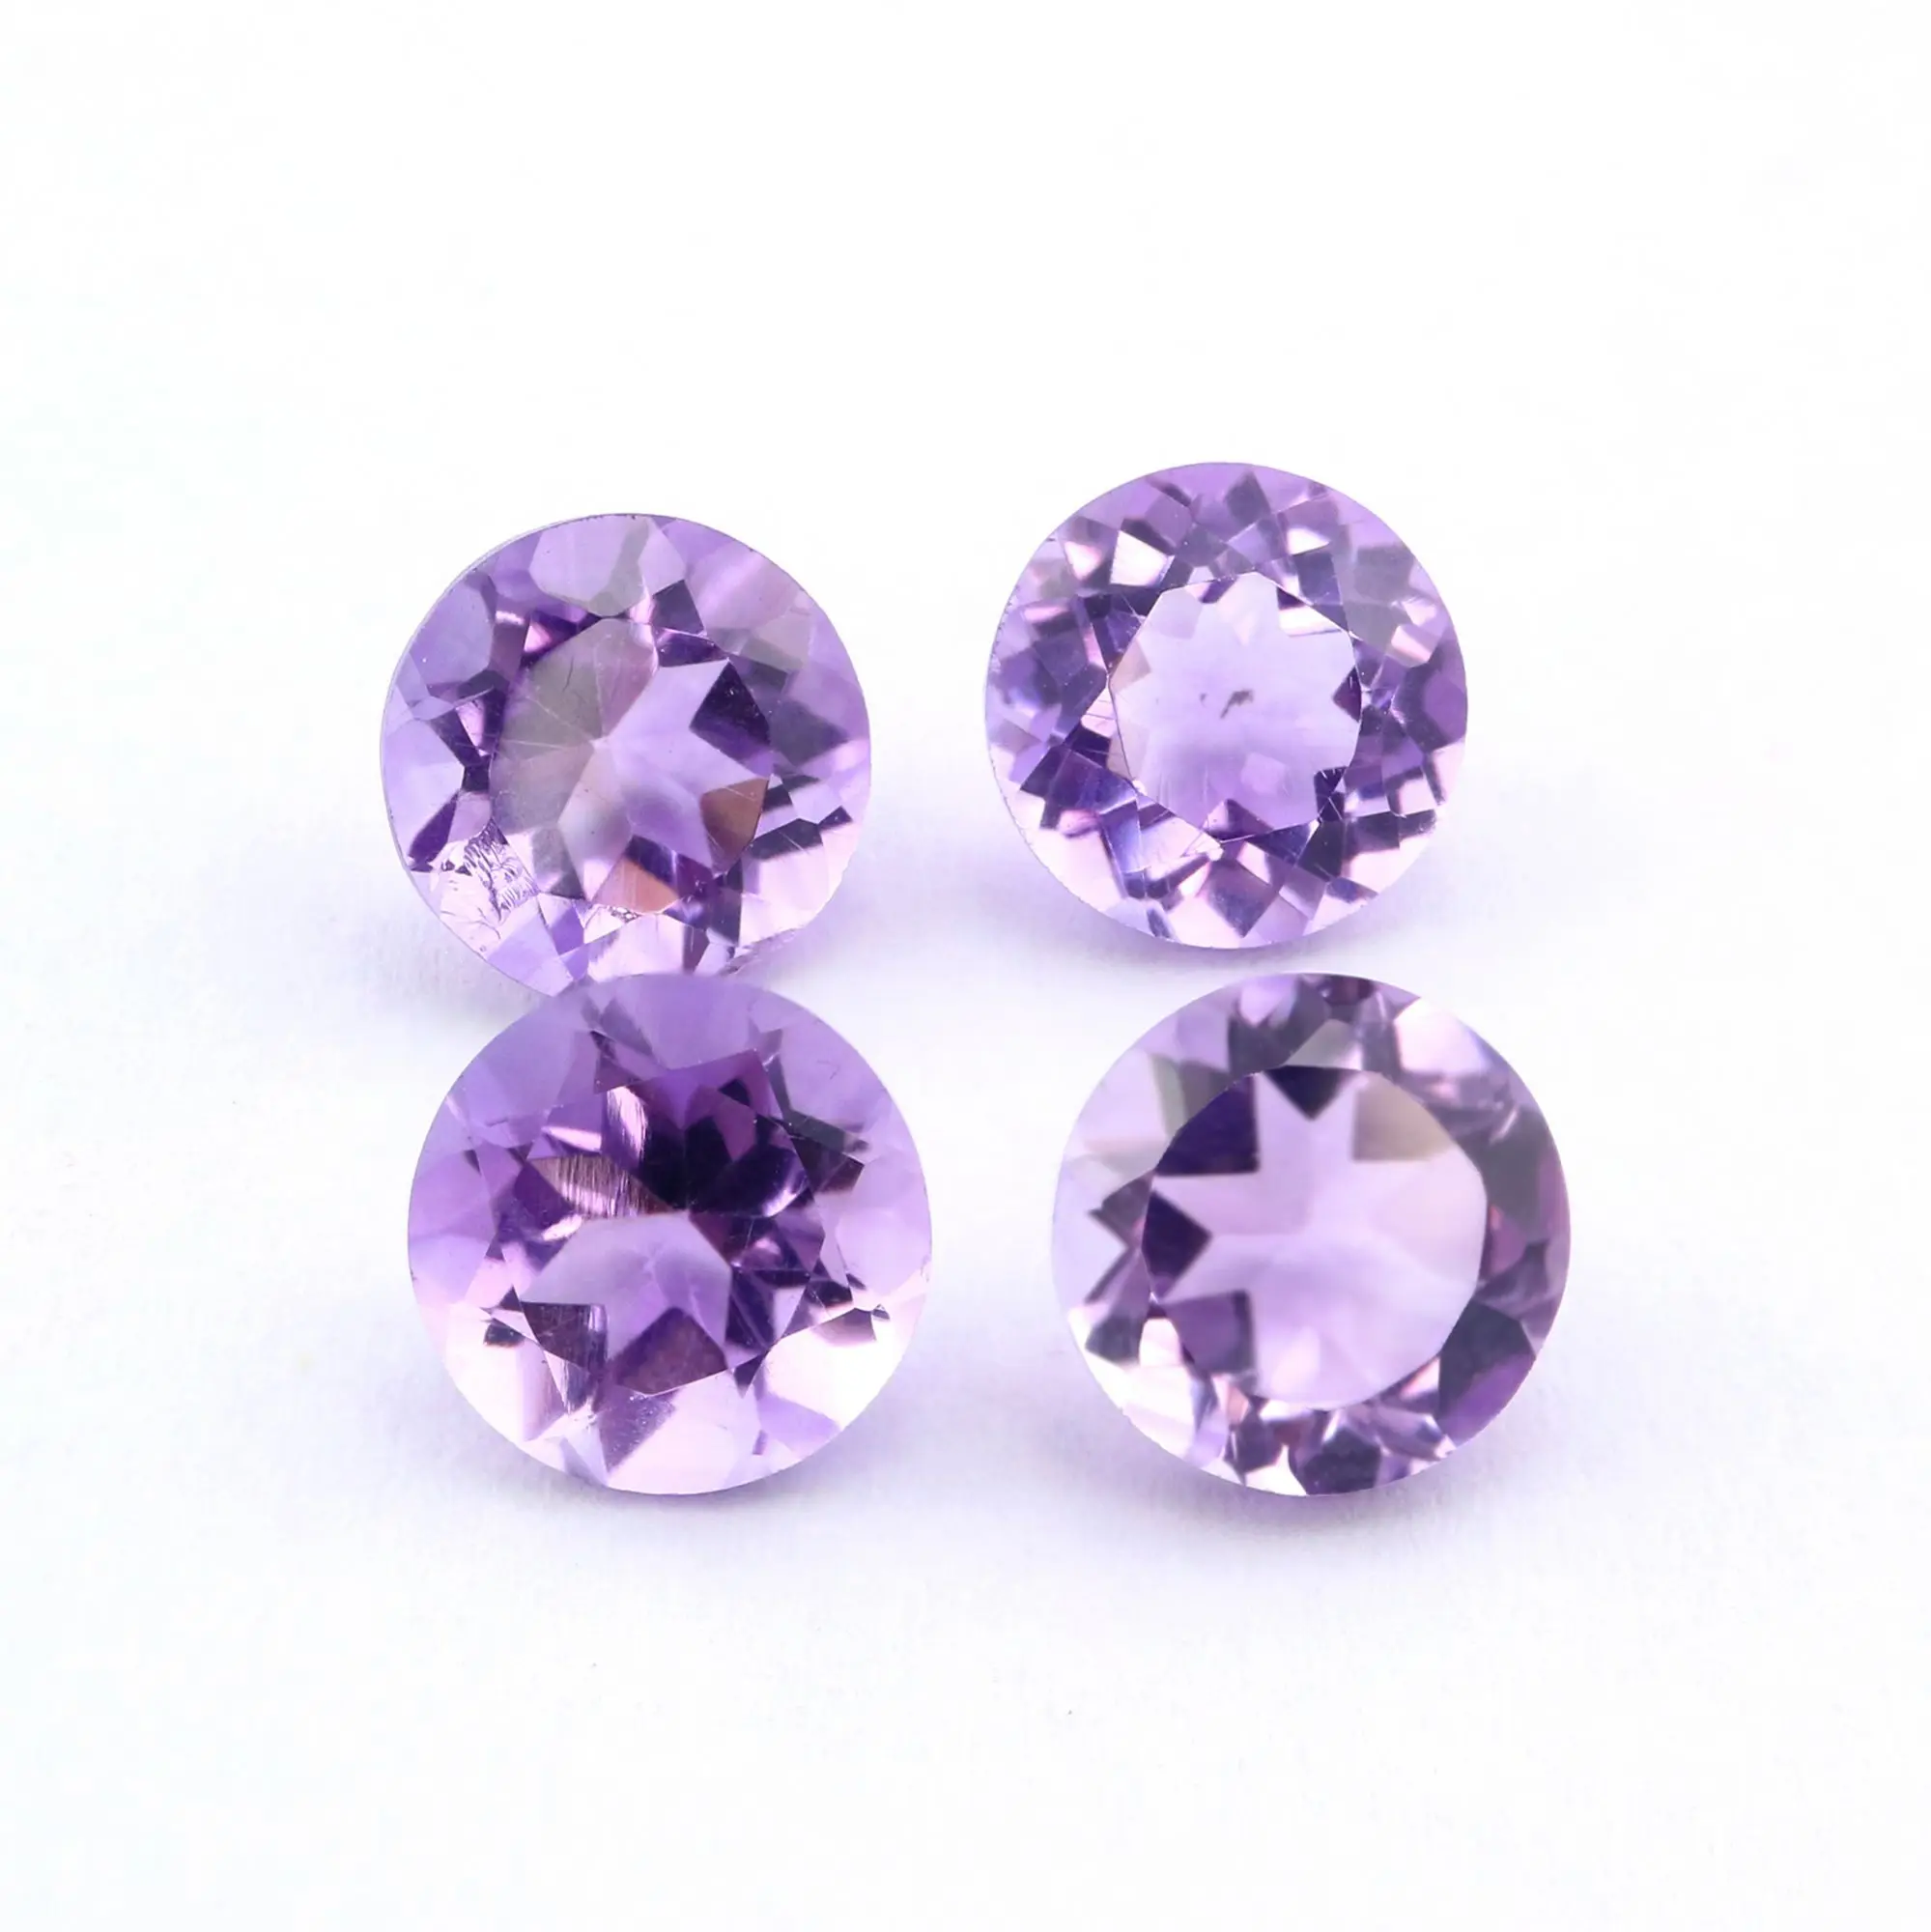 

1PcsRound Purple Amethyst February Birthstone Faceted Cut Loose Gemstone Nature Semi Precious Stone DIY Jewelry Supplies 4110169